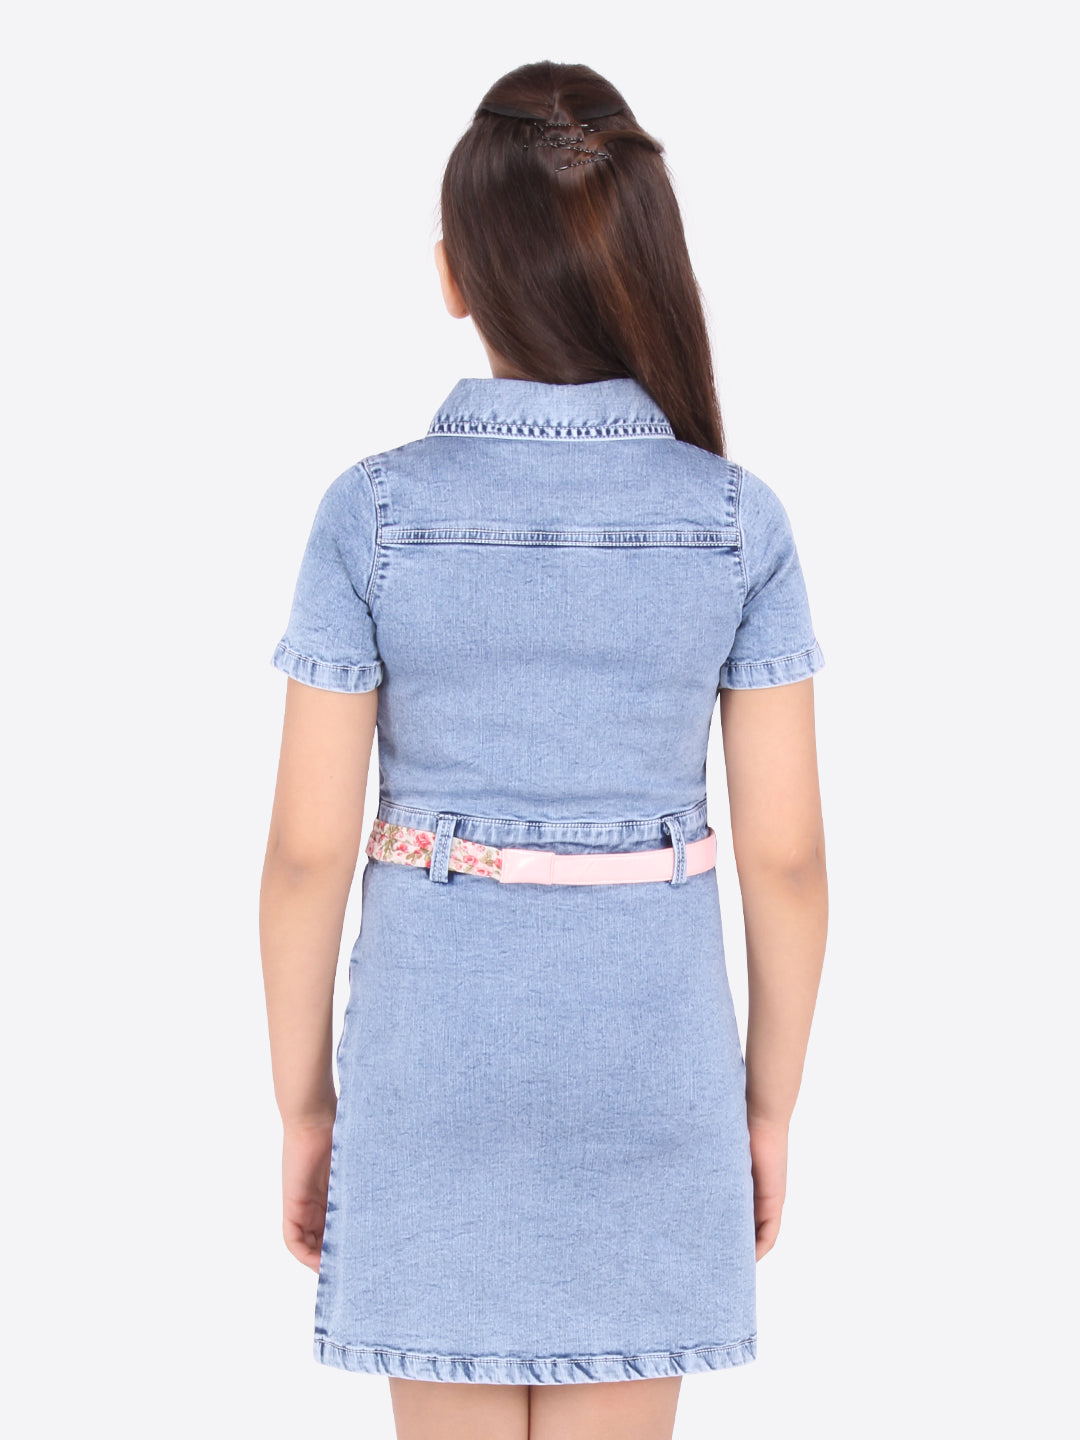 Girls Midi/Knee Length Casual Dress  (Blue, Short Sleeve)